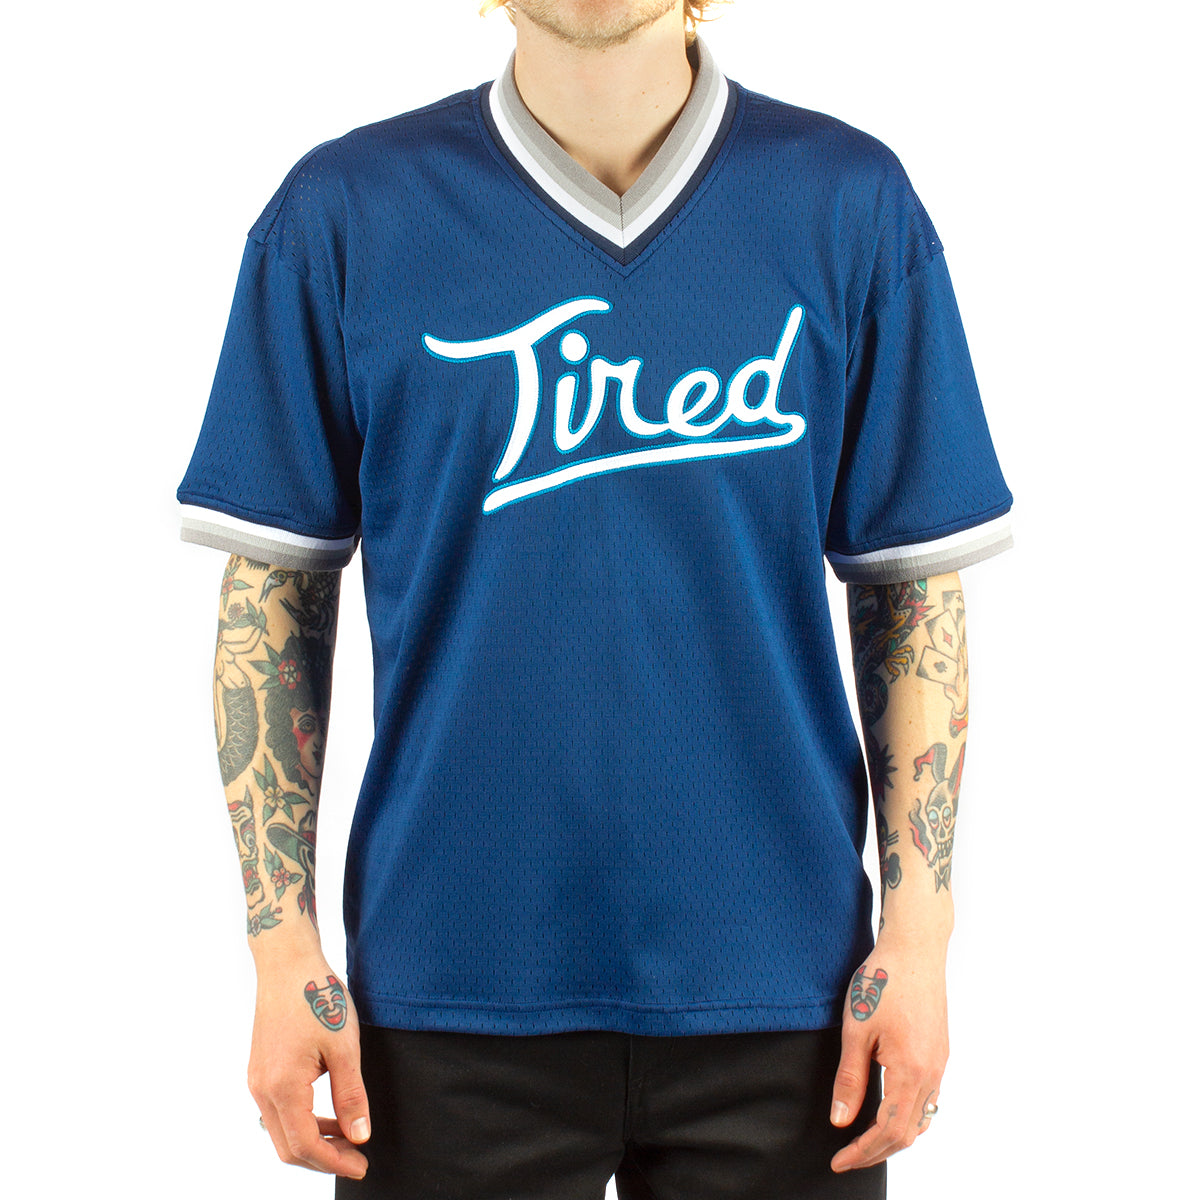 Tired Skateboards T-shirt - The Rounders Baseball Jersey Navy